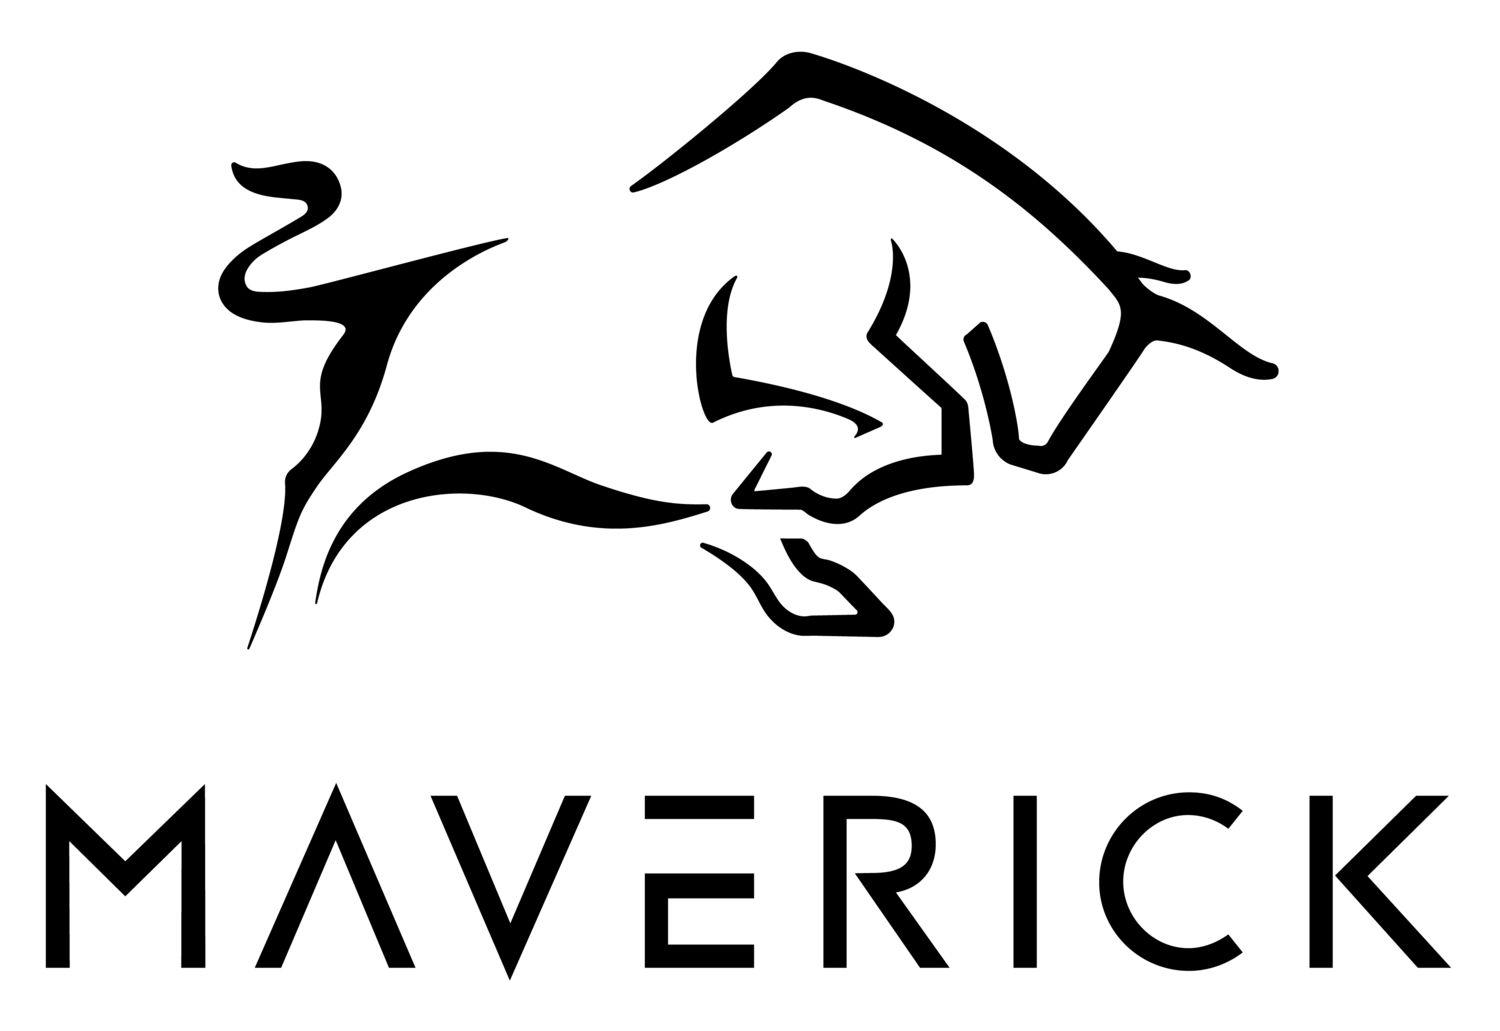 Mavrick Logo - Let's talk — Team Maverick